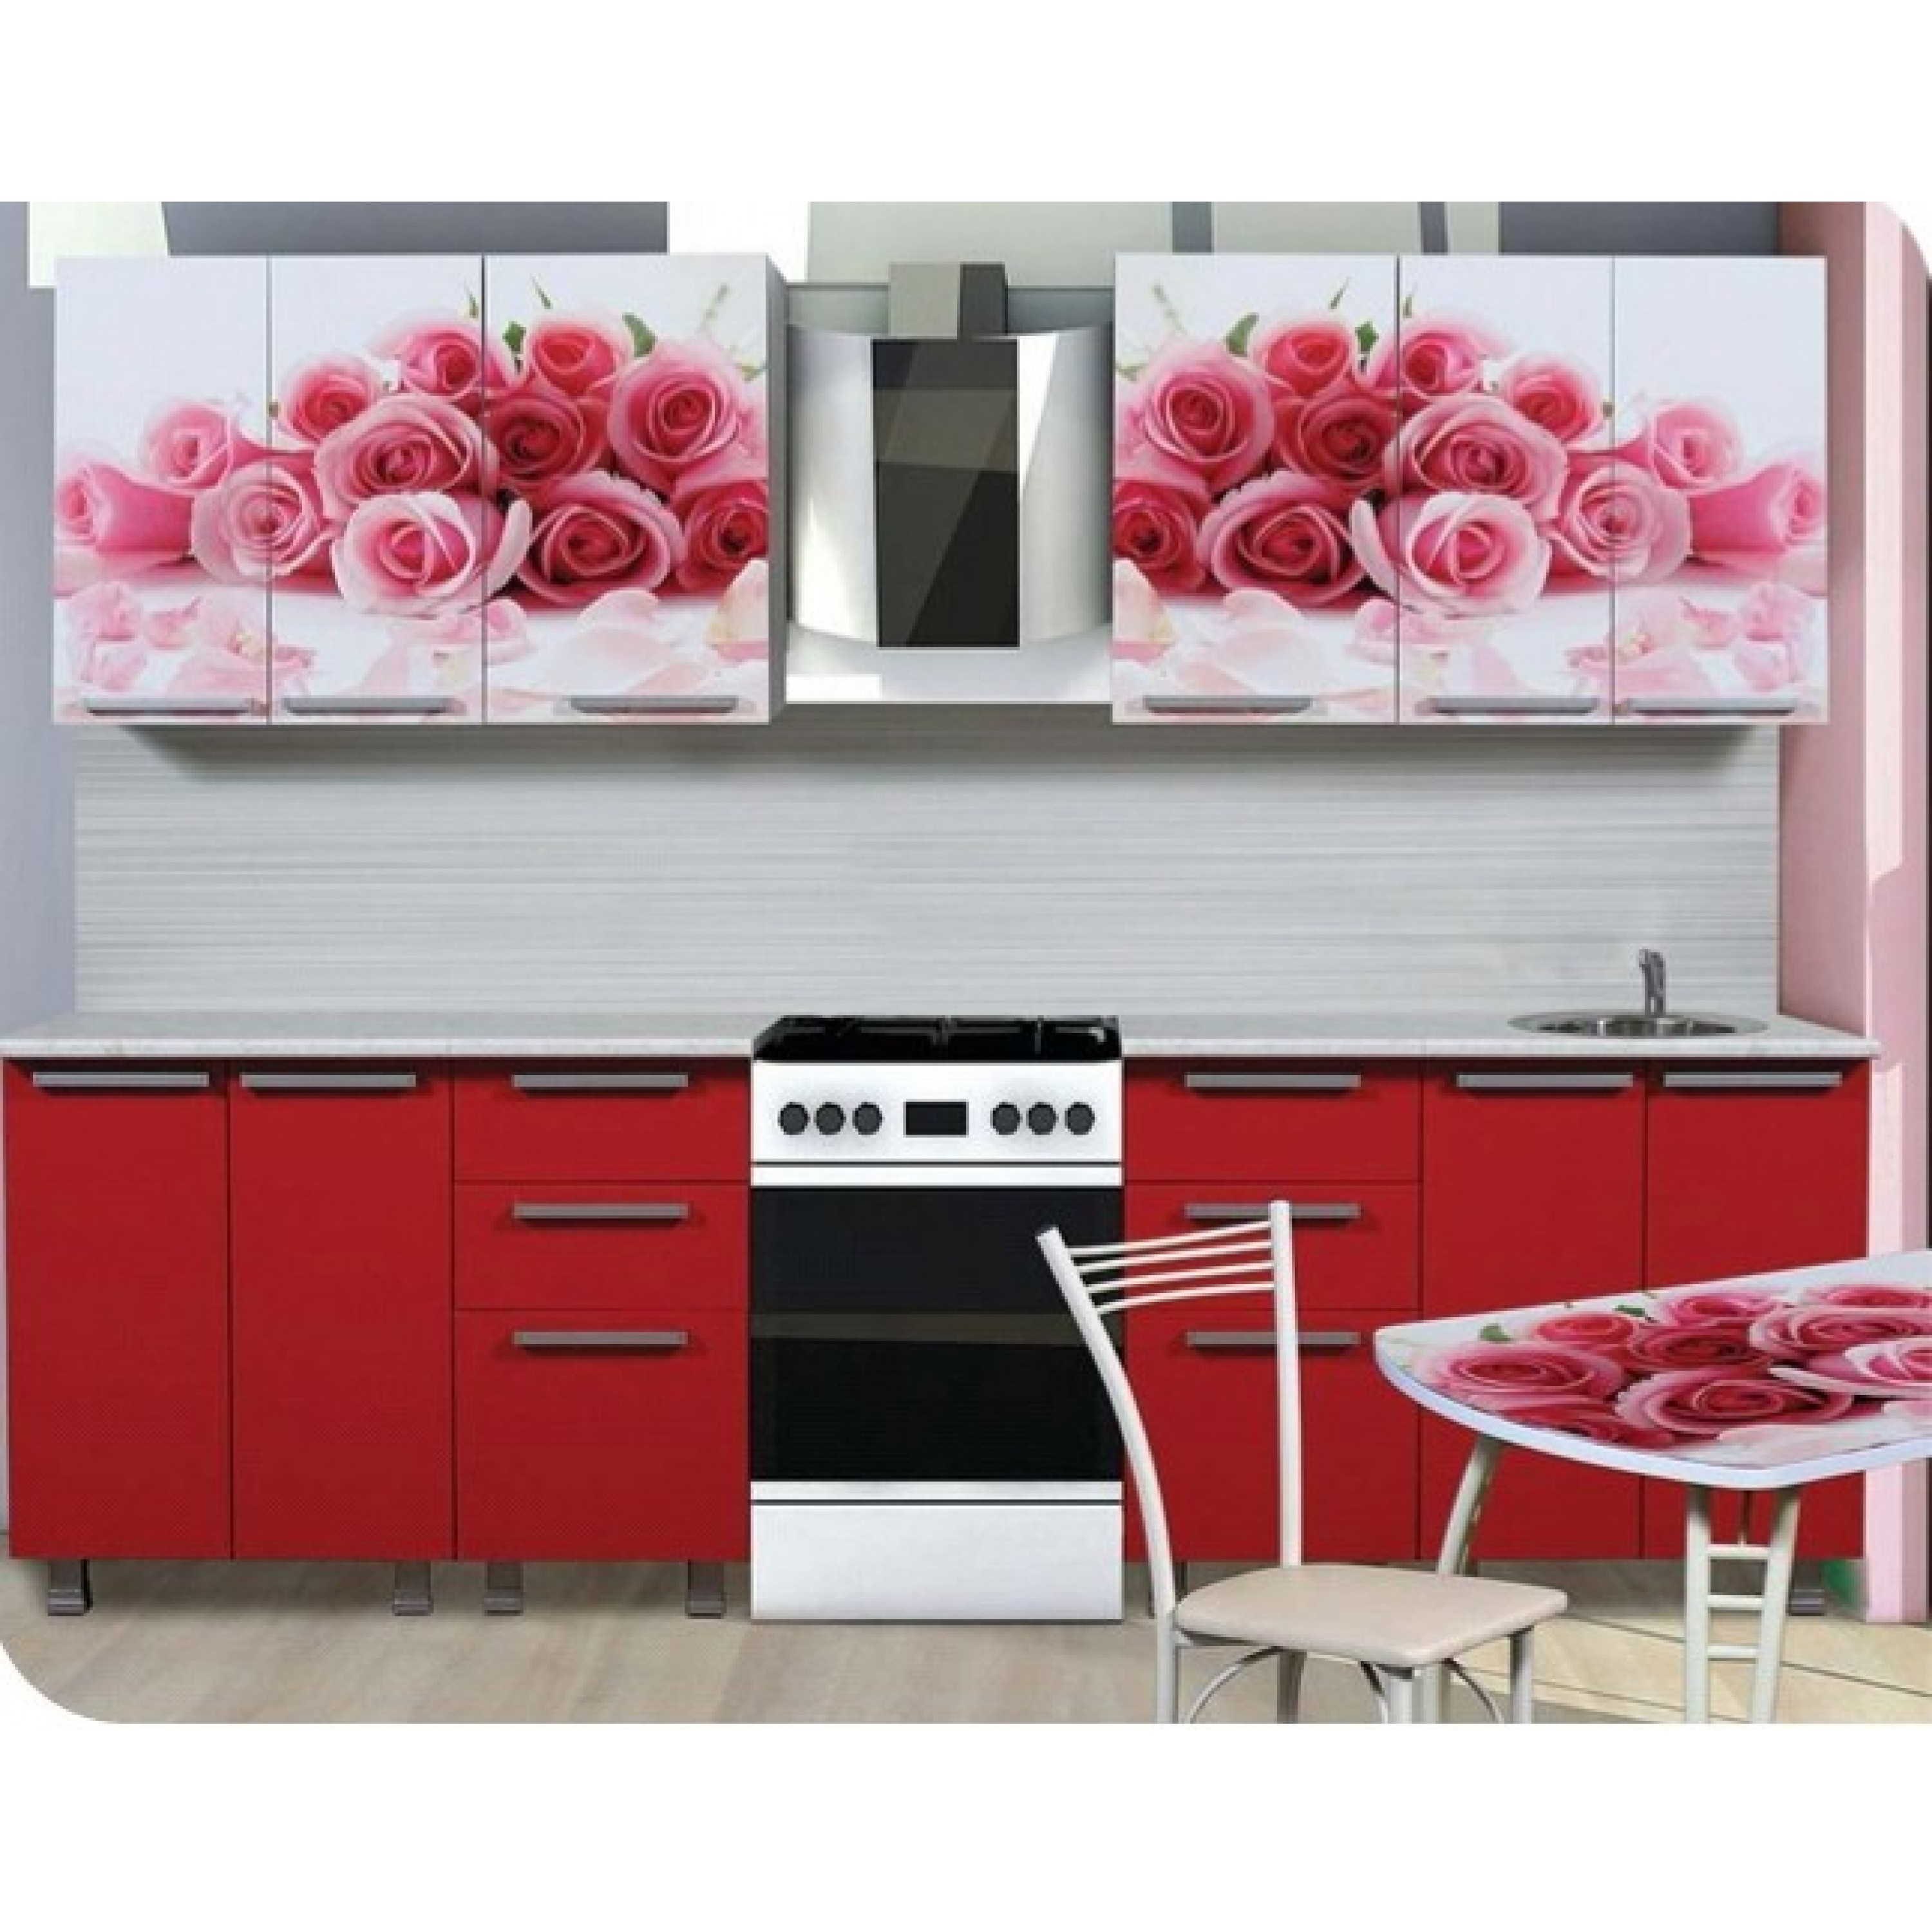 Кухонный гарнитур с розами